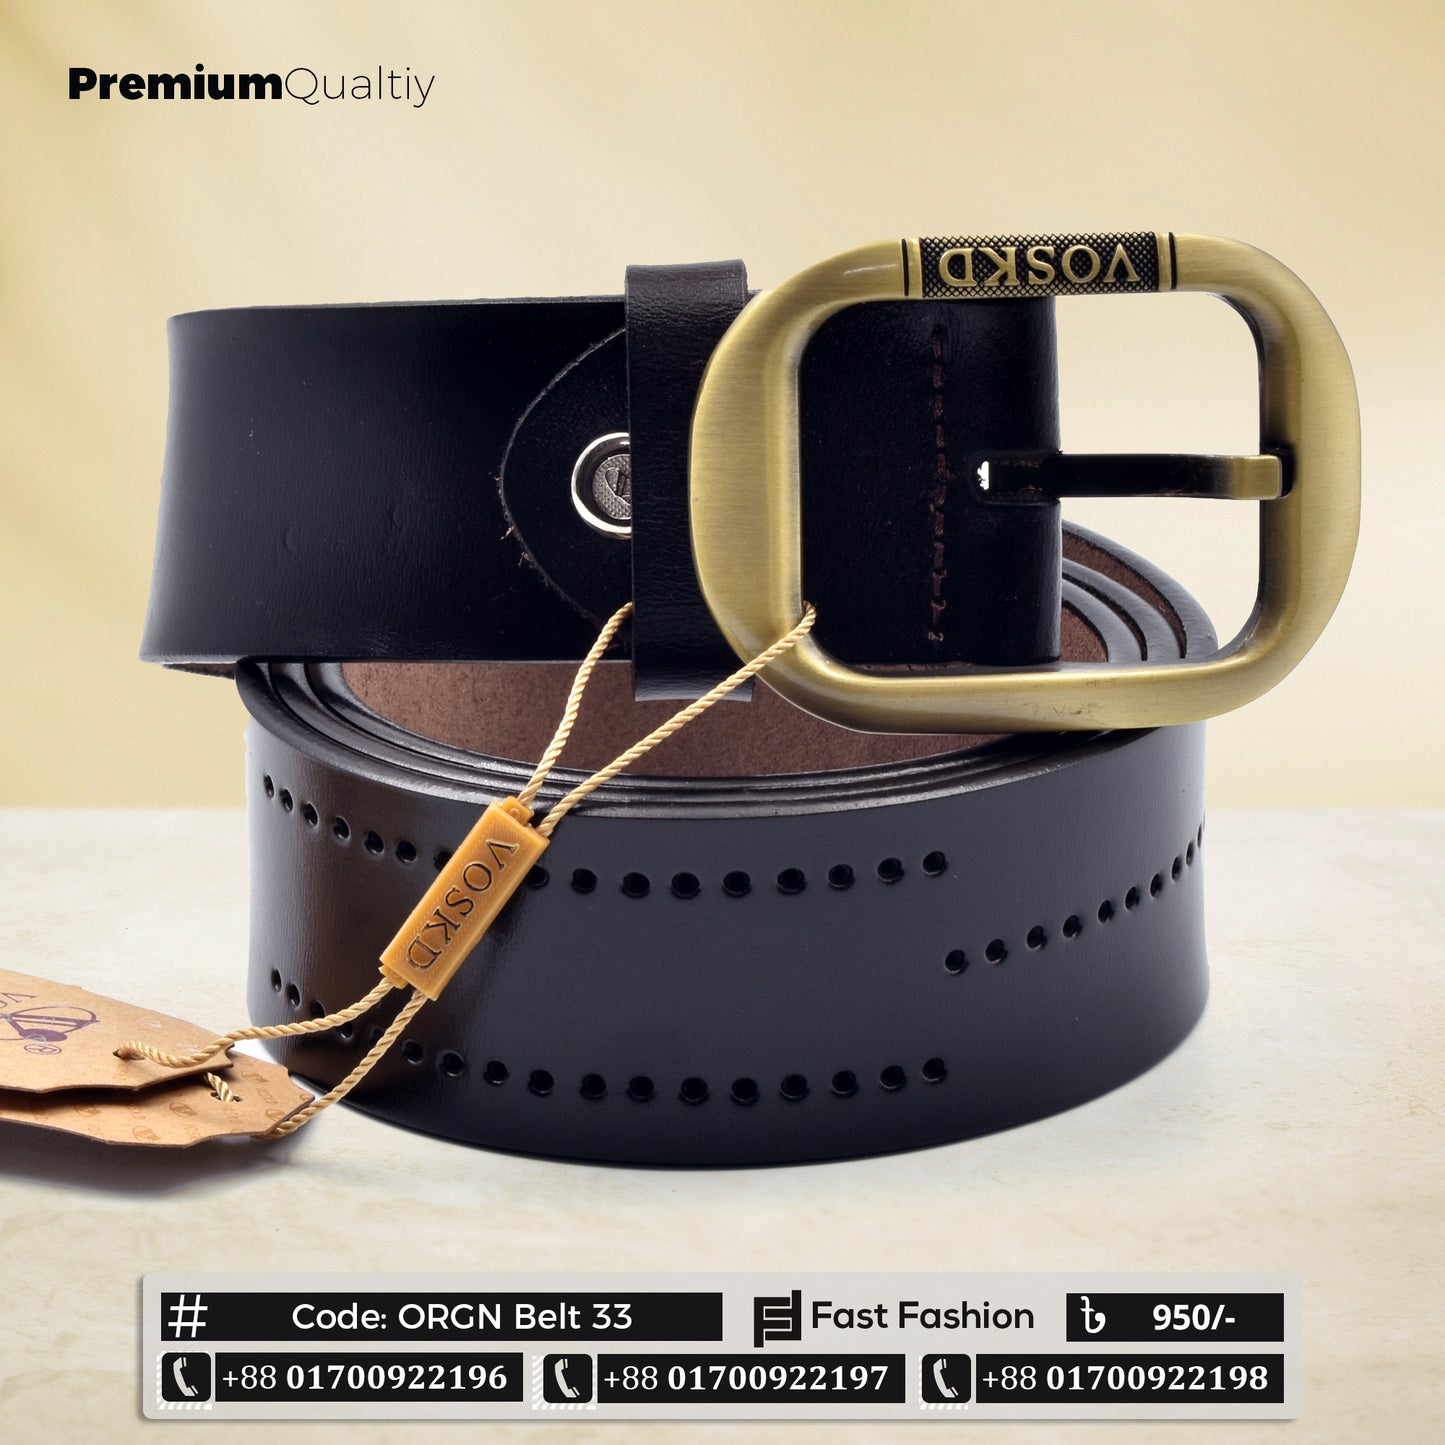 Stylish Premium Quality Original Leather Belt - ORGN Belt 33